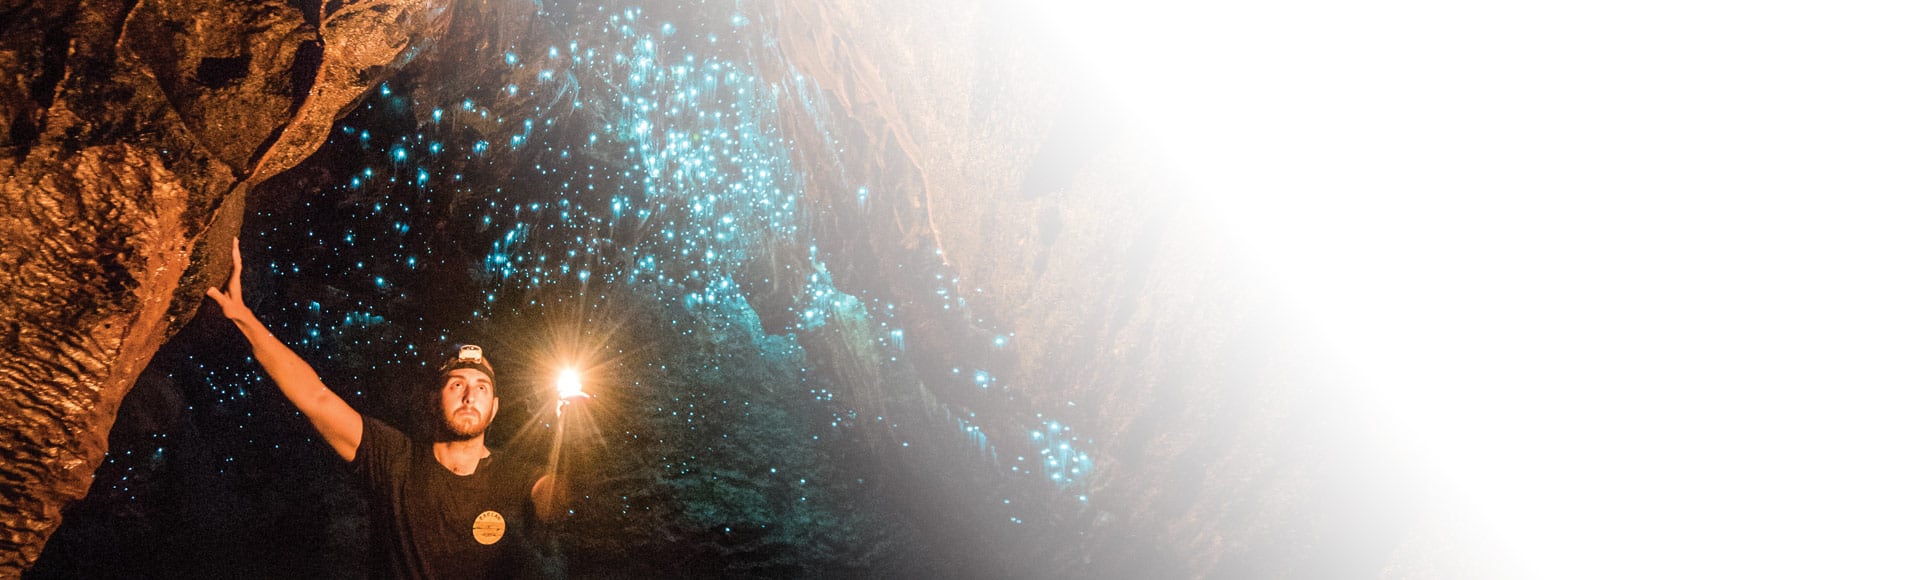 glowworm caves, new zealand